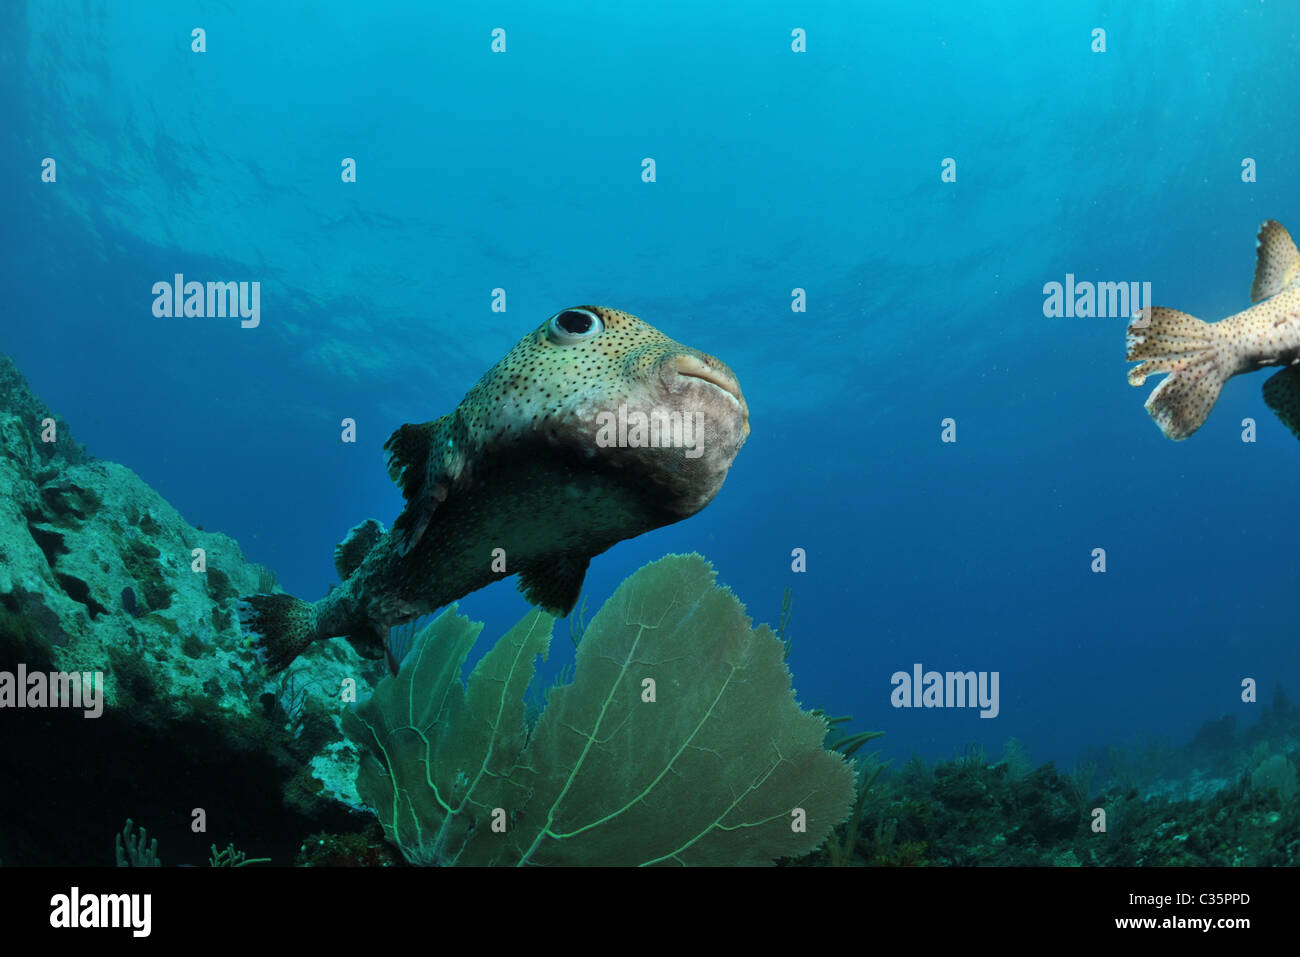 Giant Adult Porcupine Pufferfish Stock Photo Alamy